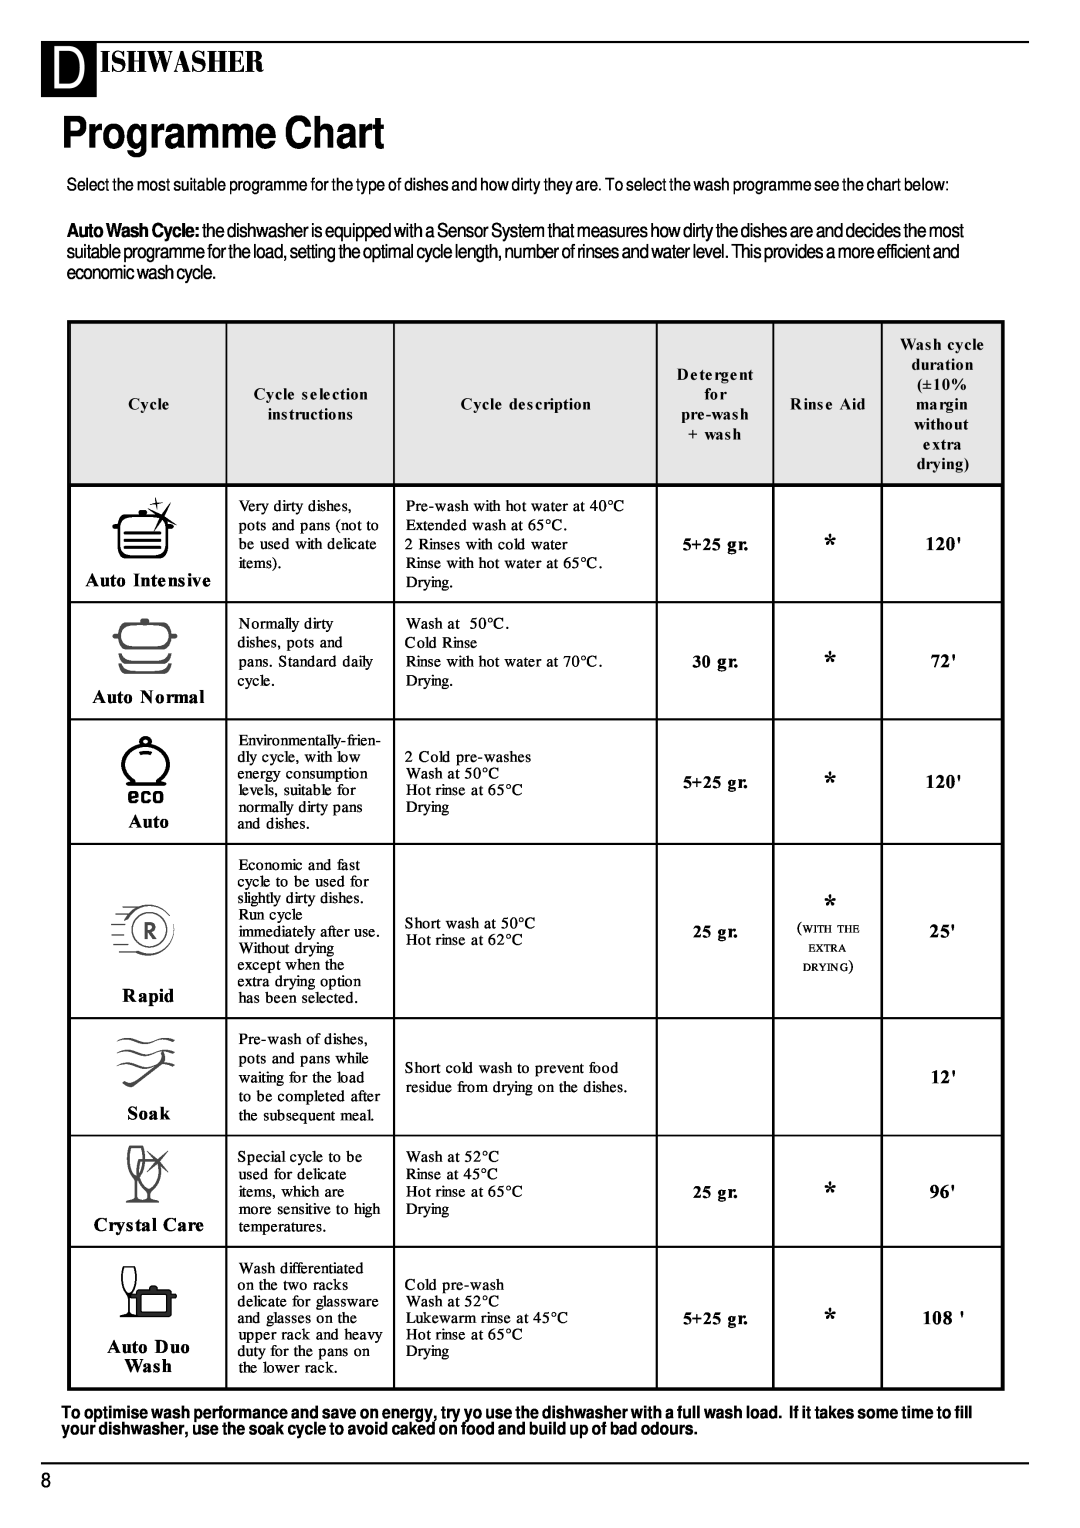 Hotpoint BFV680 manual Programme Chart, D Ishwasher 